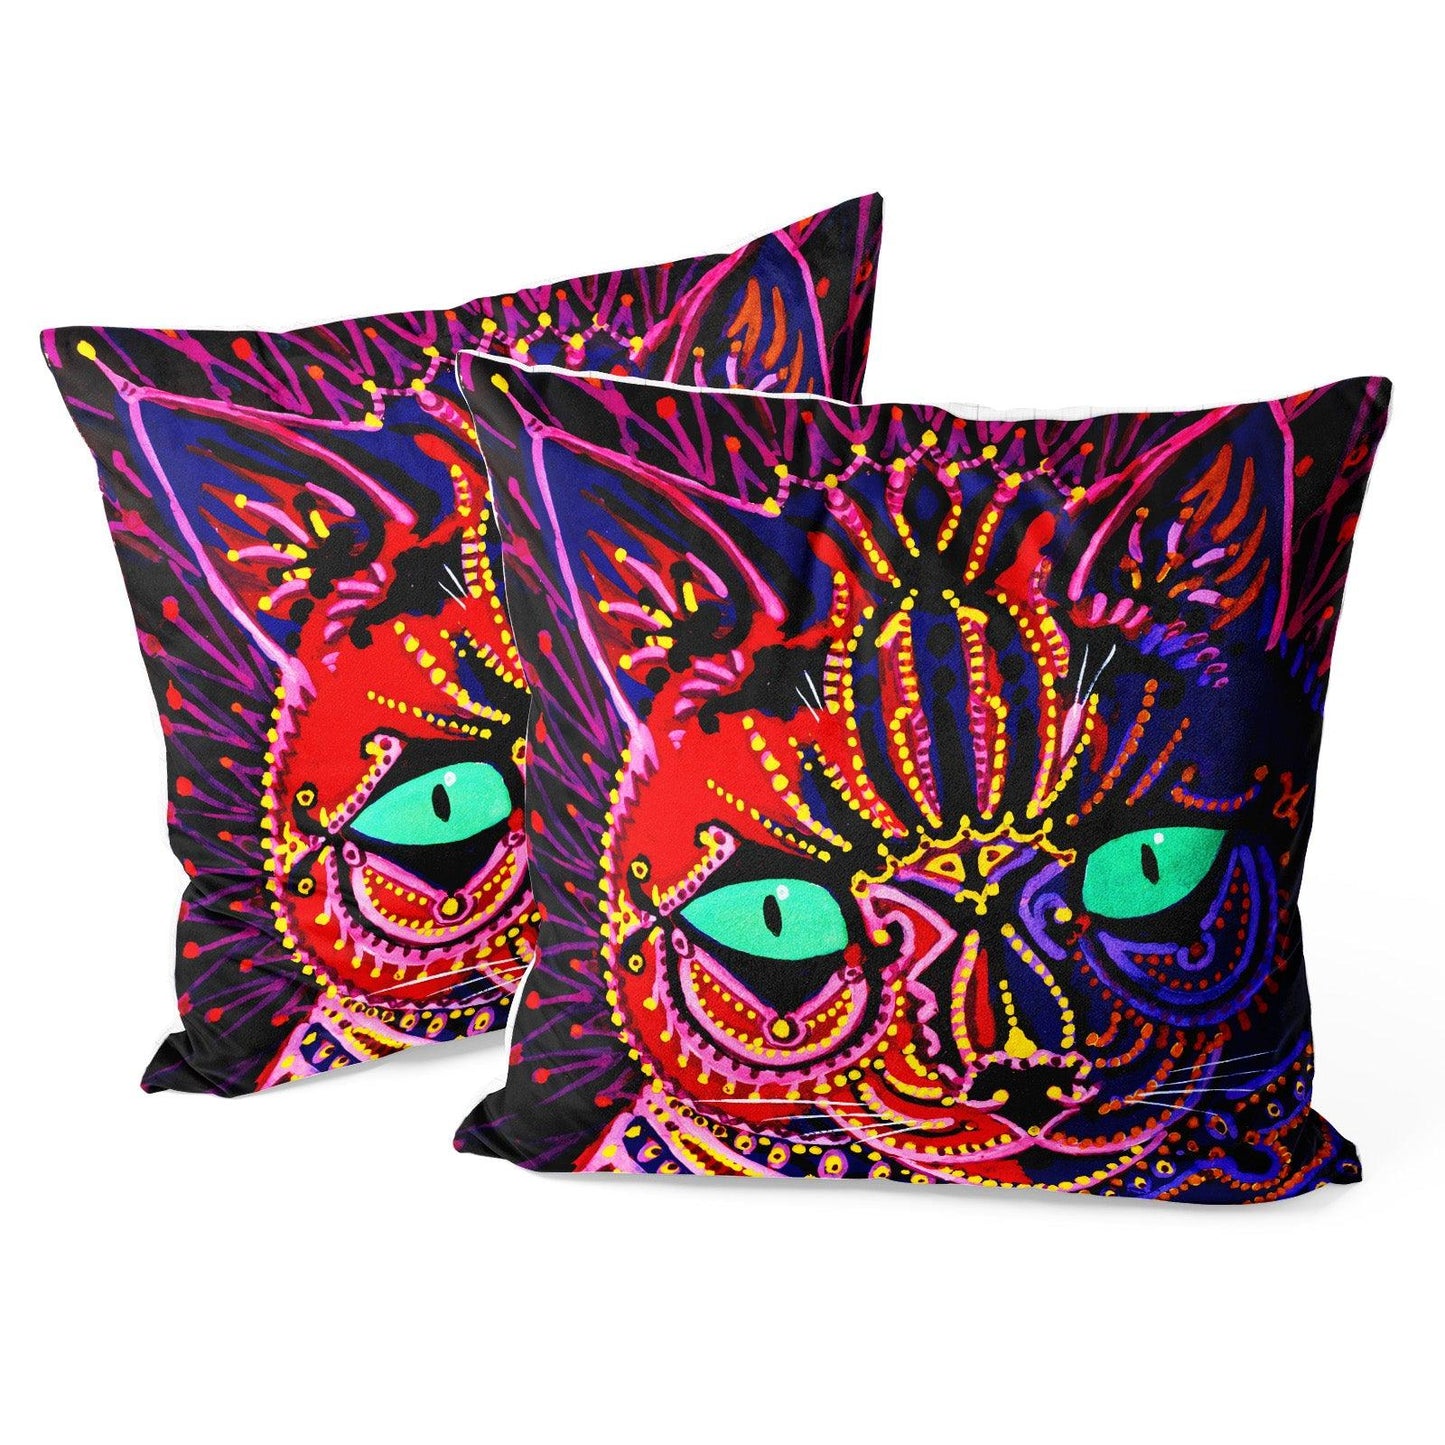 Art Animal Throw Pillow Covers Pack of 2 18x18 Inch (Kaleidoscope Cat by Louis Wain) - Berkin Arts